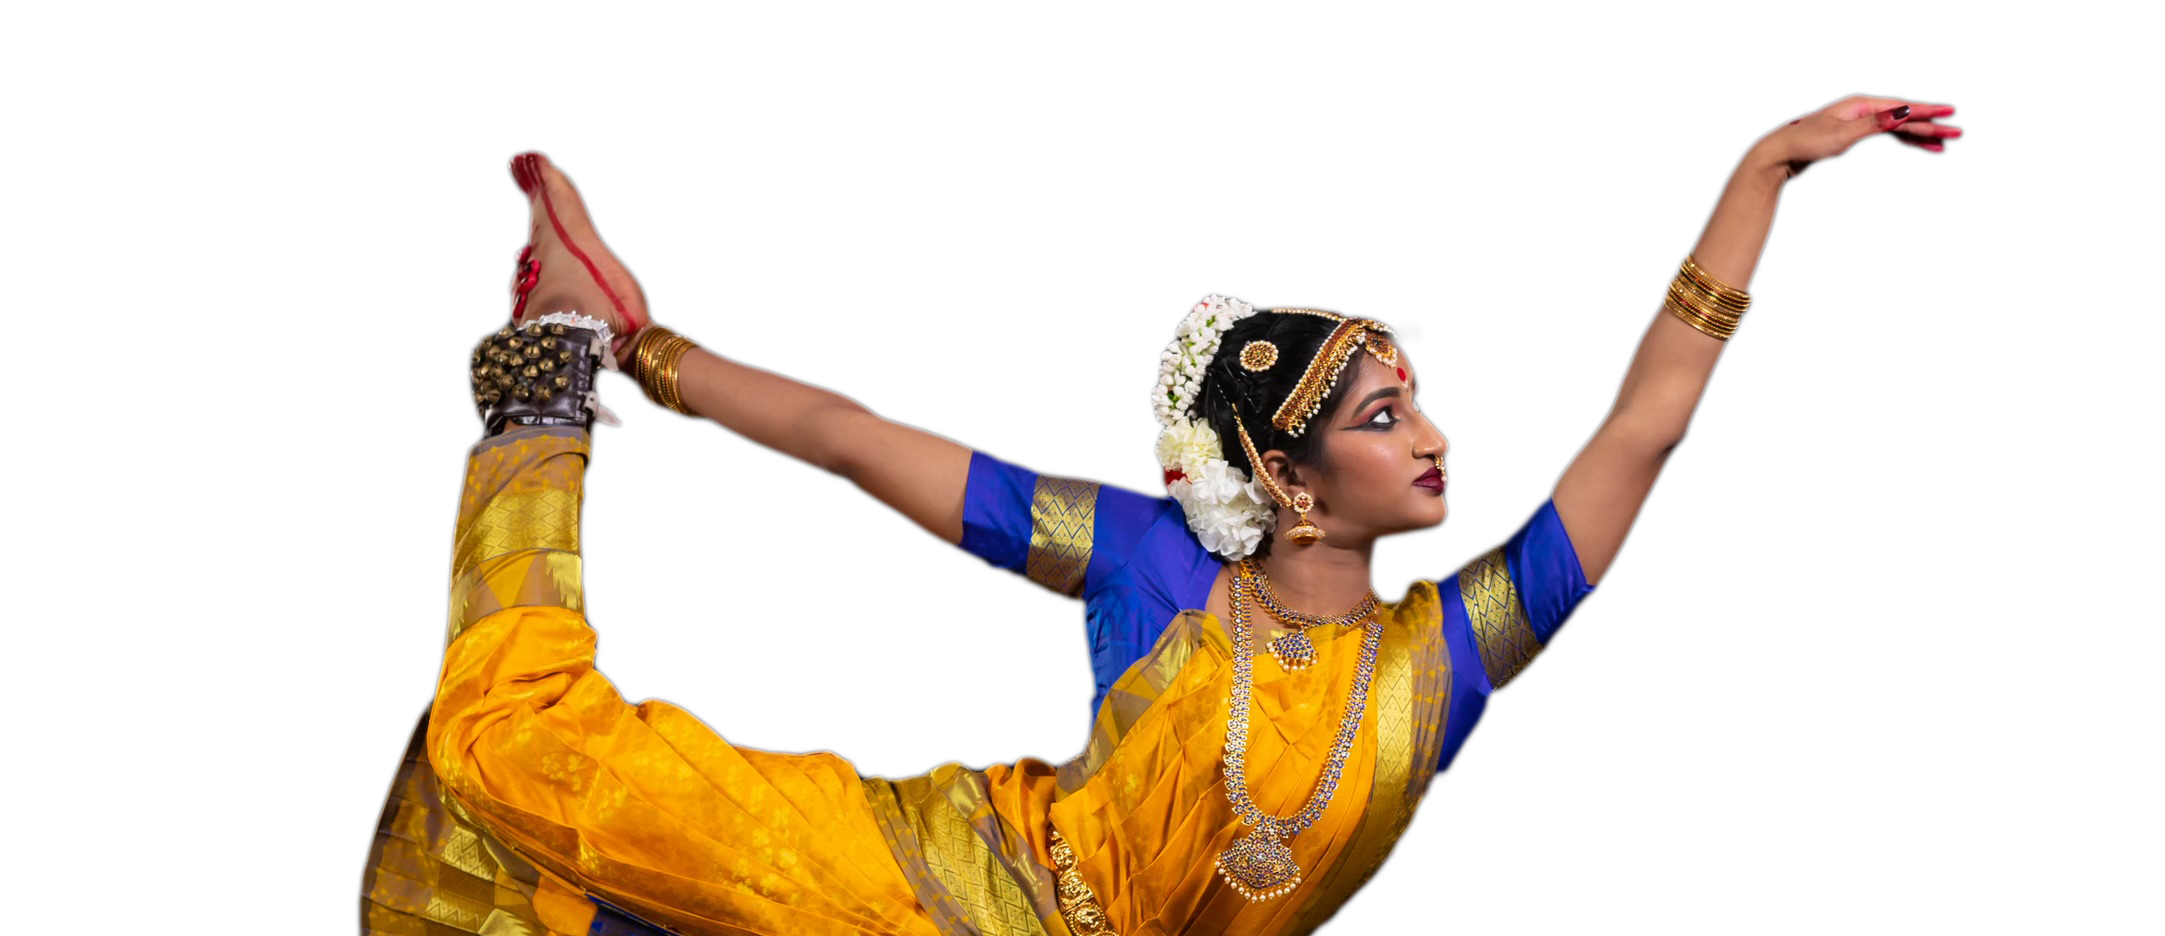 Image of bharatanatyam dancer performing on stage-DU224850-Picxy